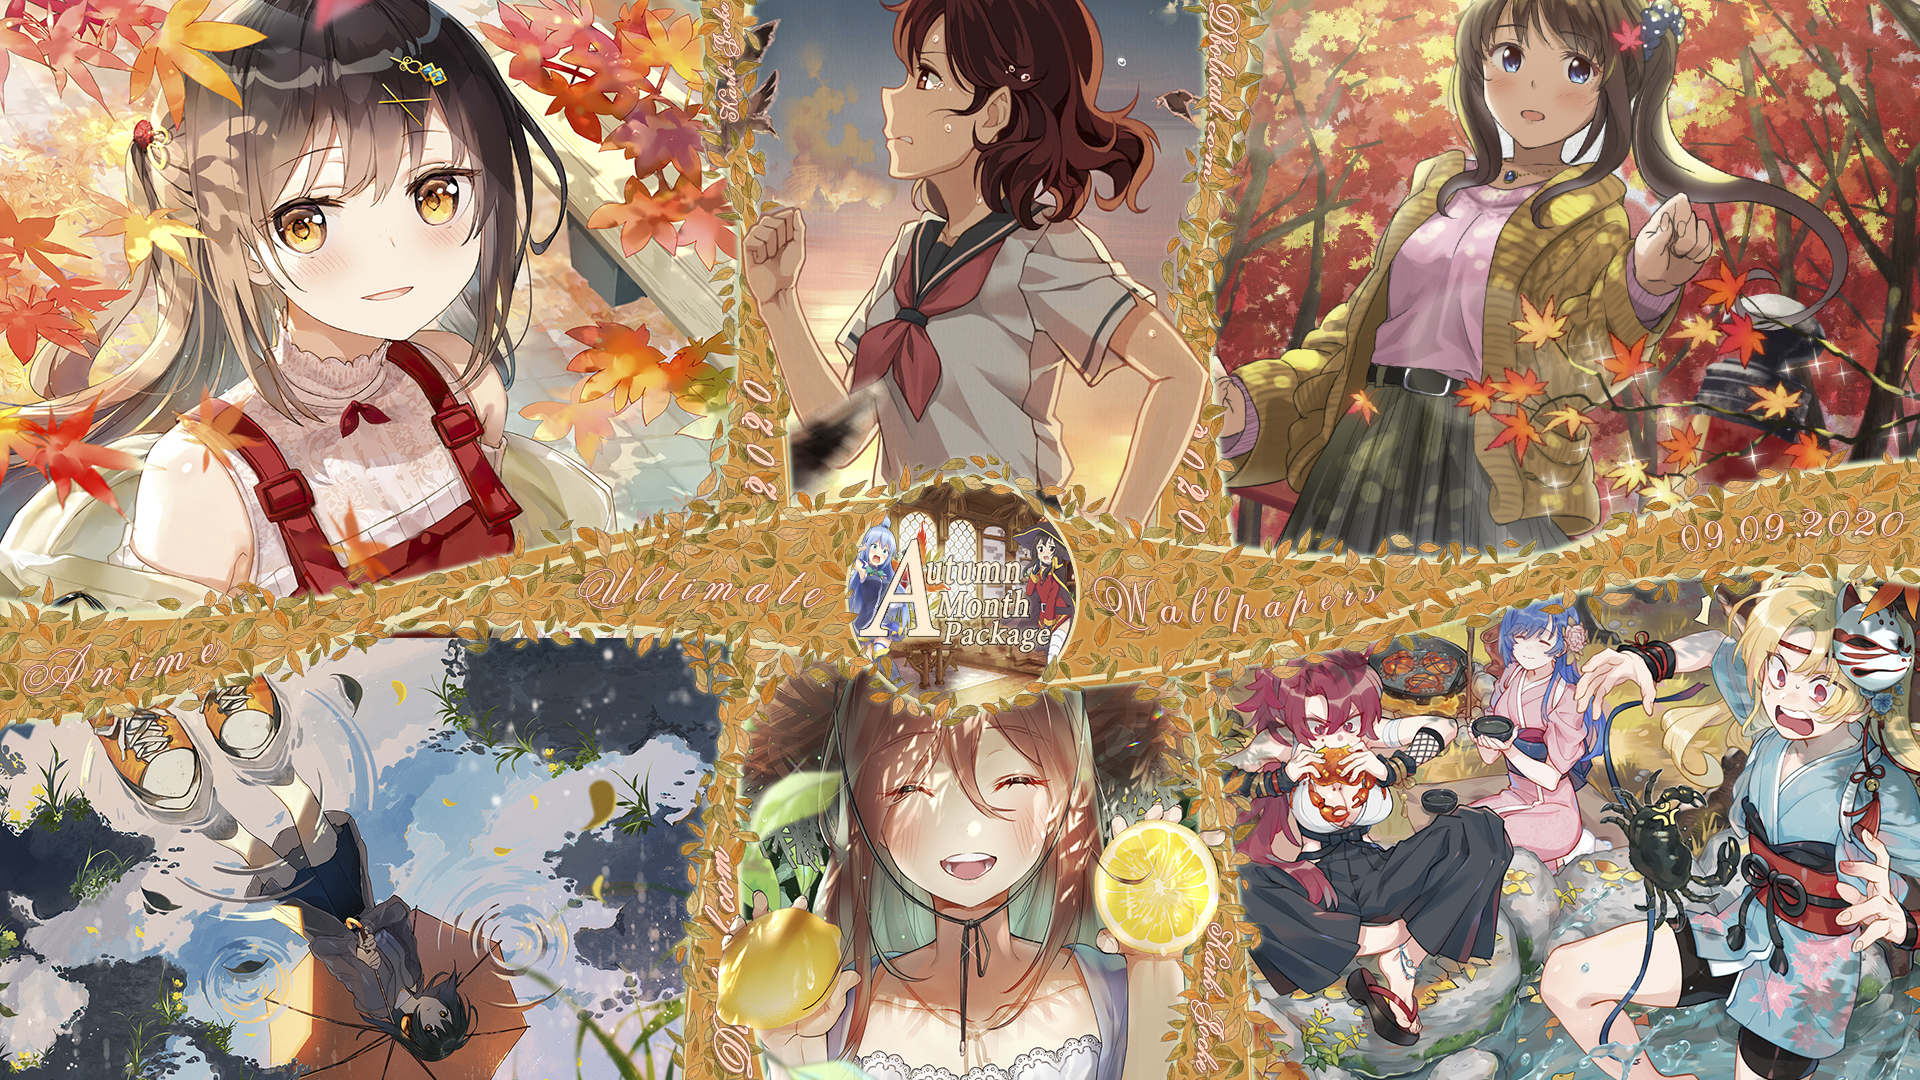 Old Anime Wallpaper's (Full-HD) - 09.09.20 file - Animes' Heaven